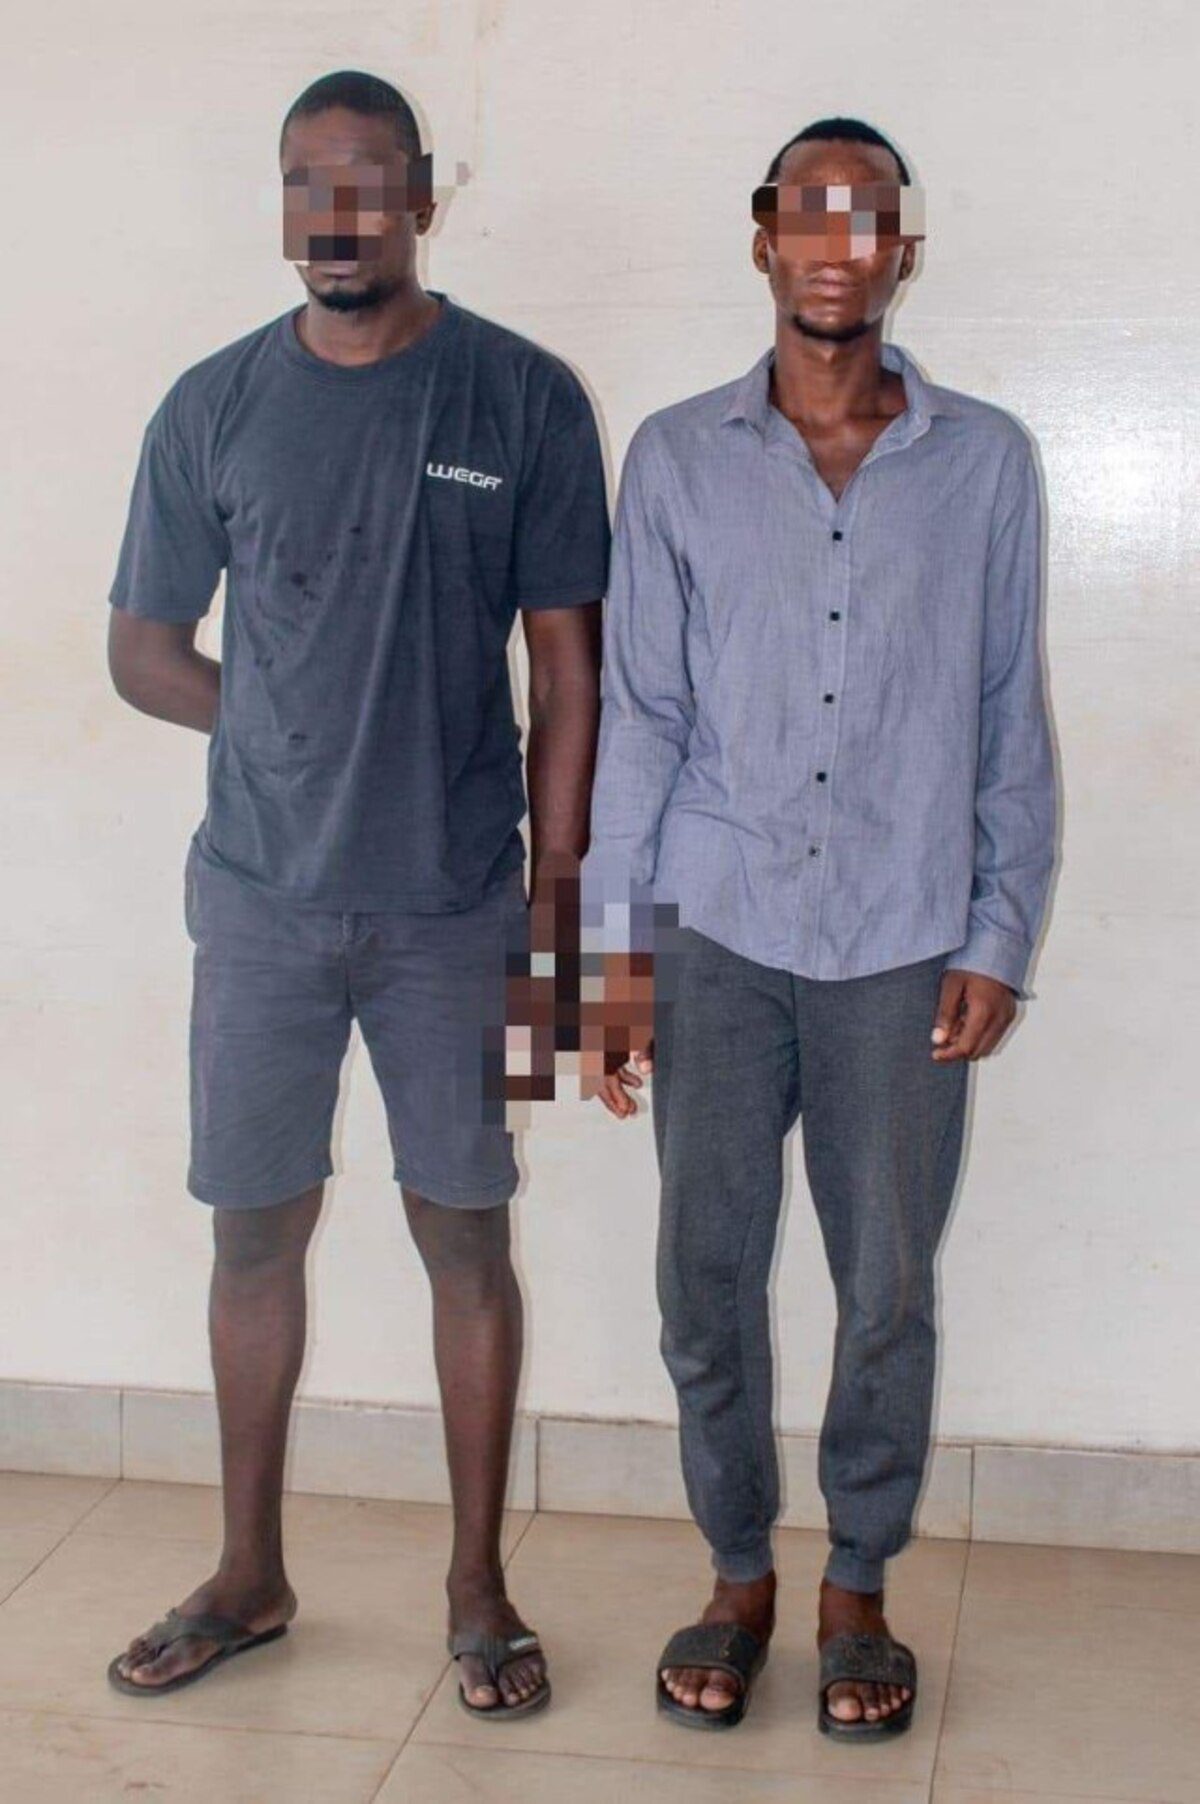 La police nationale togolaise arrête deux dangereux criminels